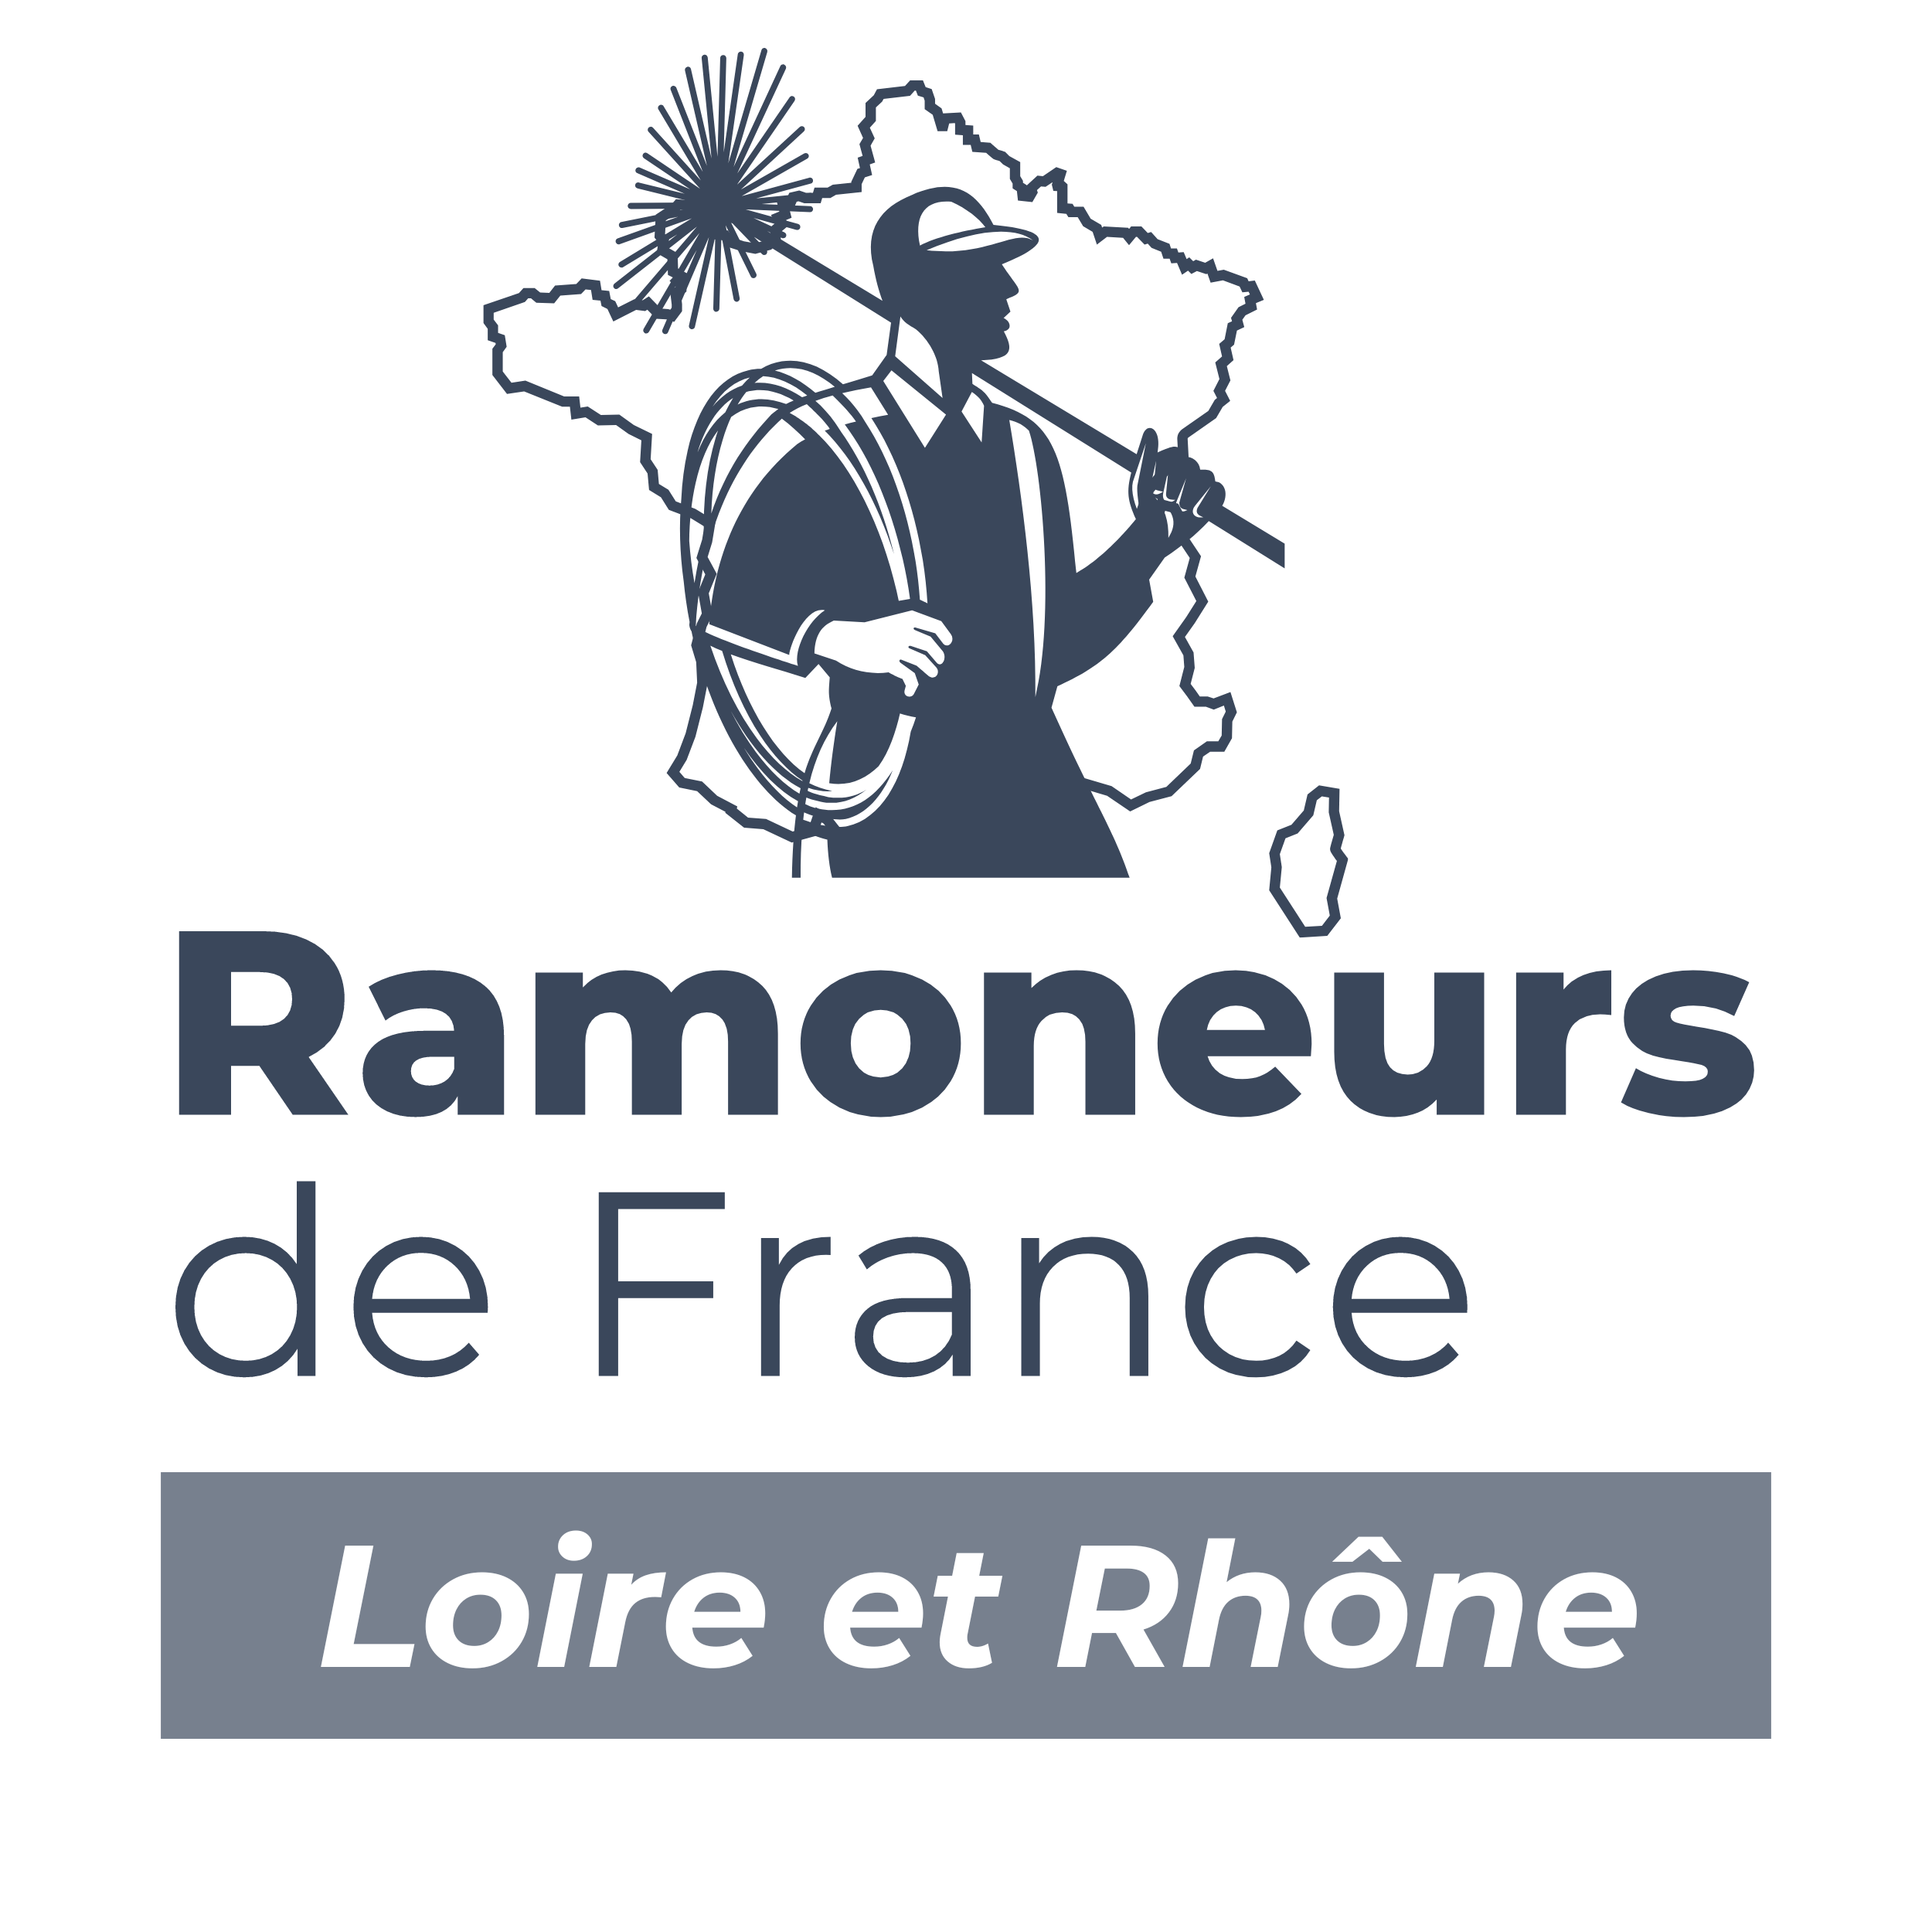 Ramoneurs de France